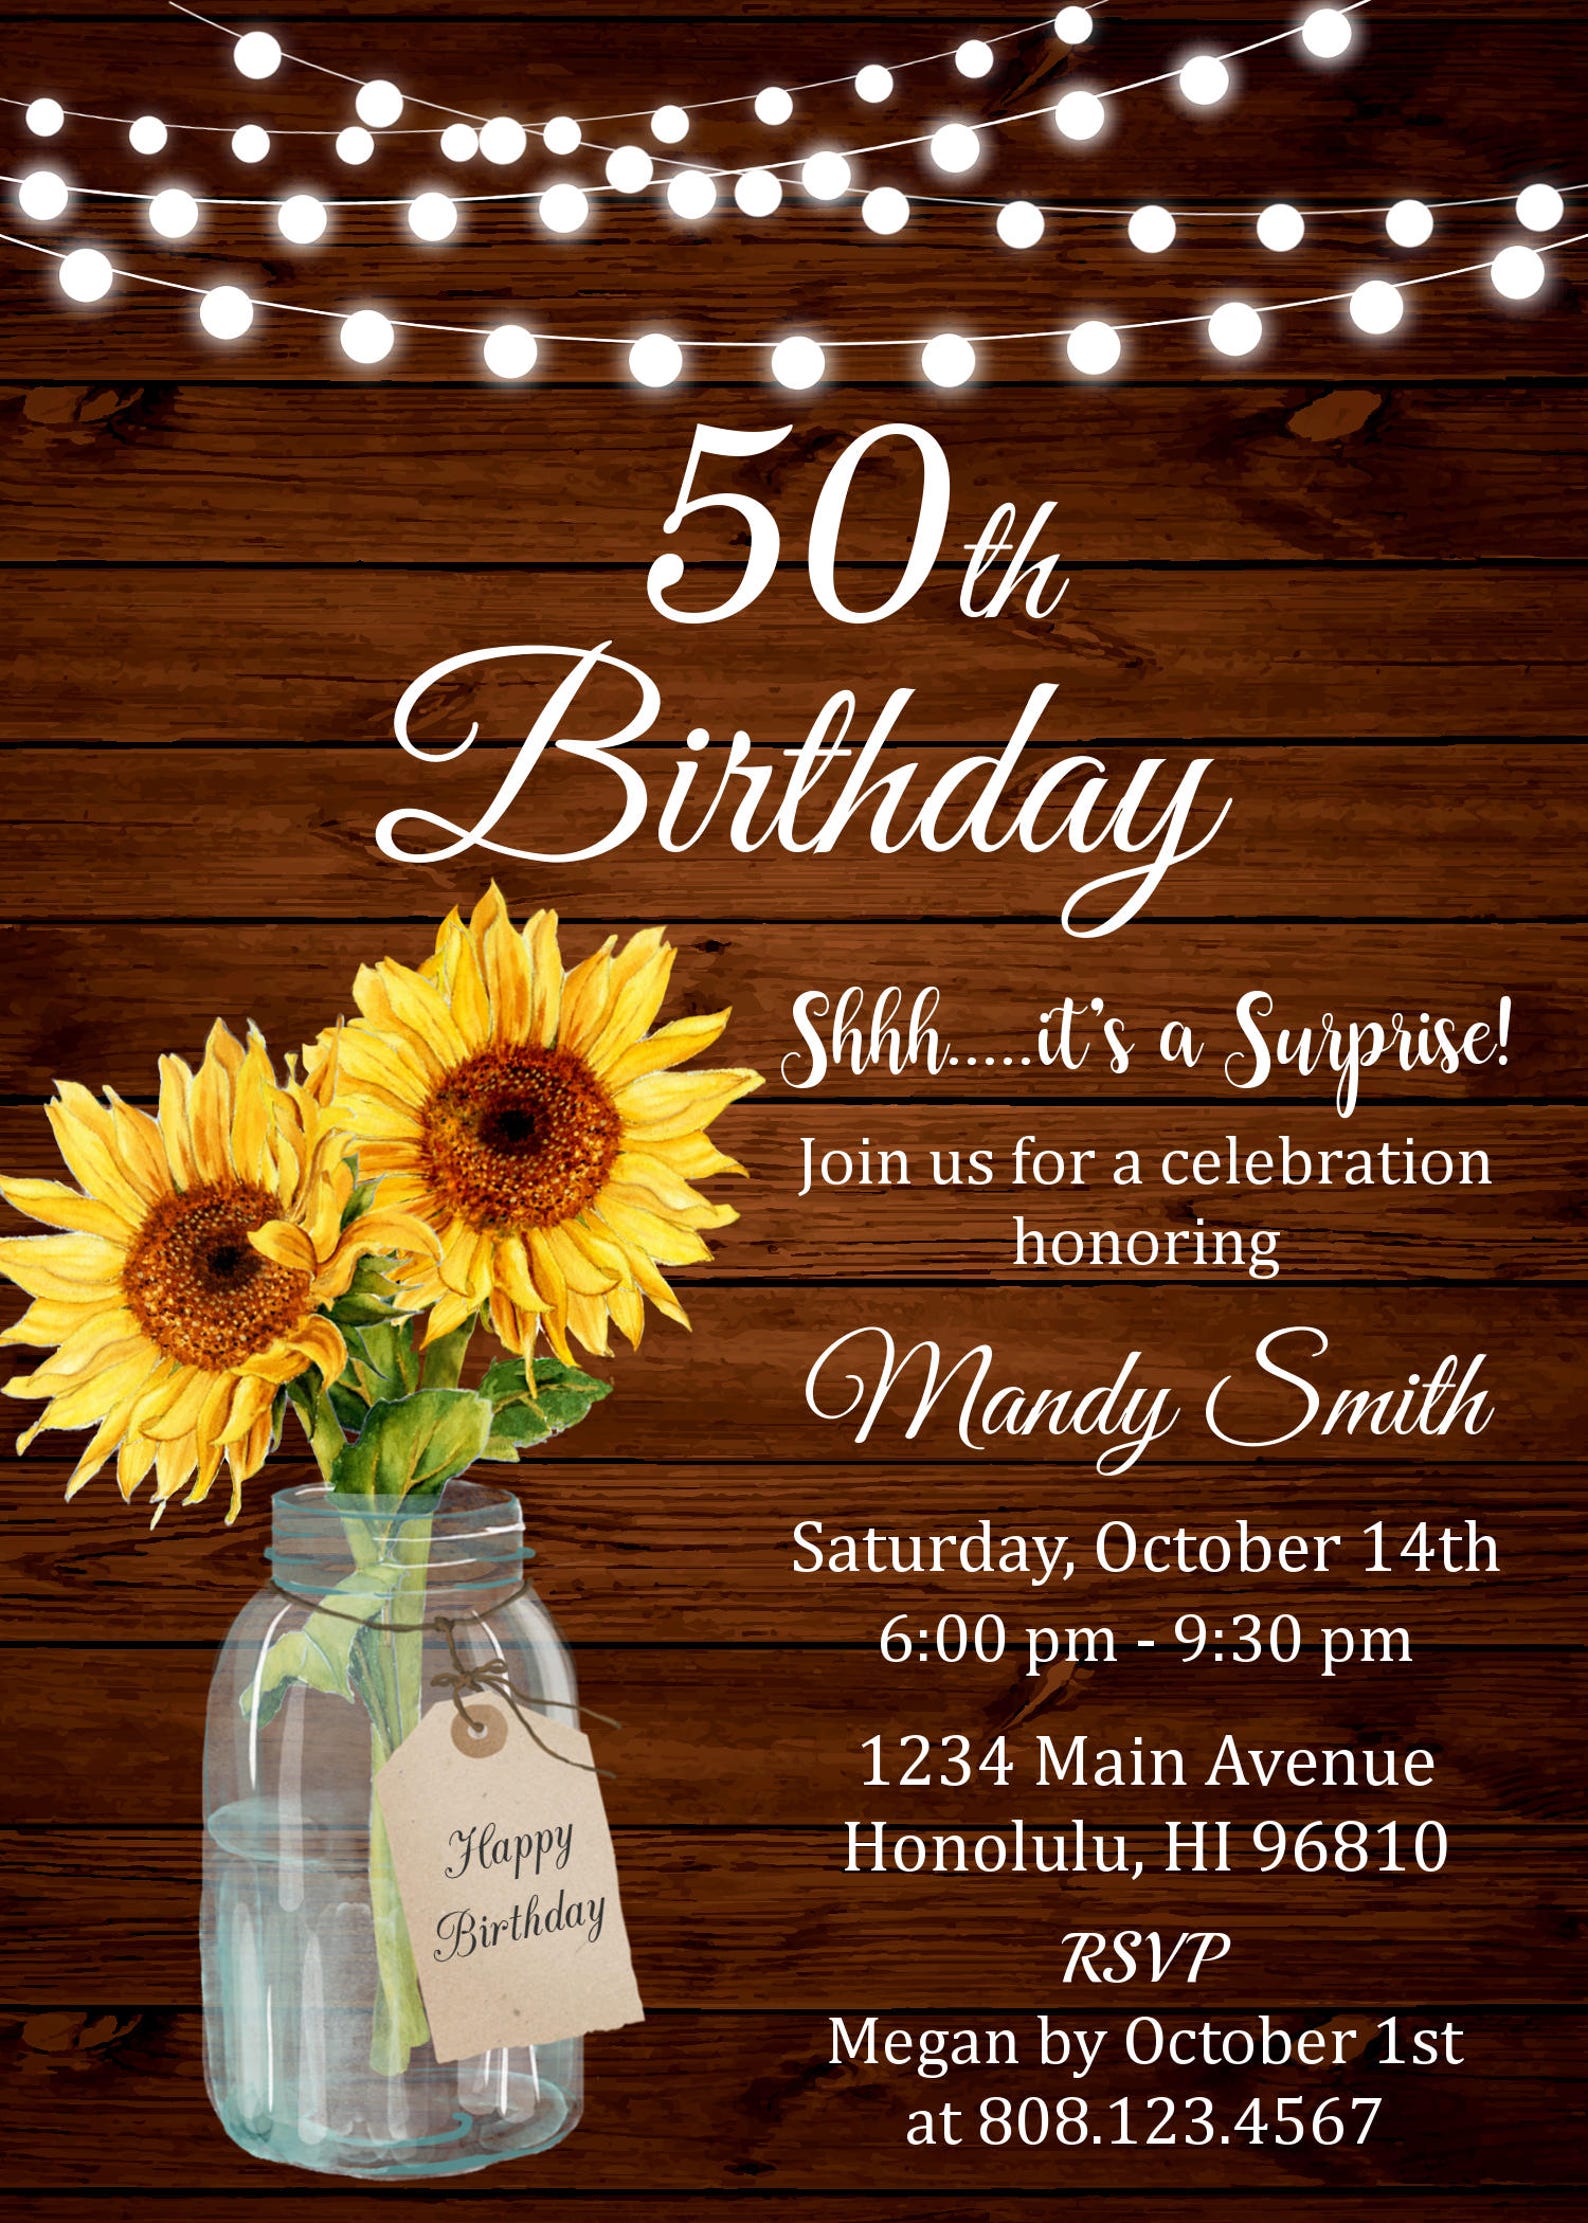 50th-birthday-invitation-for-women-rustic-birthday-mason-jar-etsy